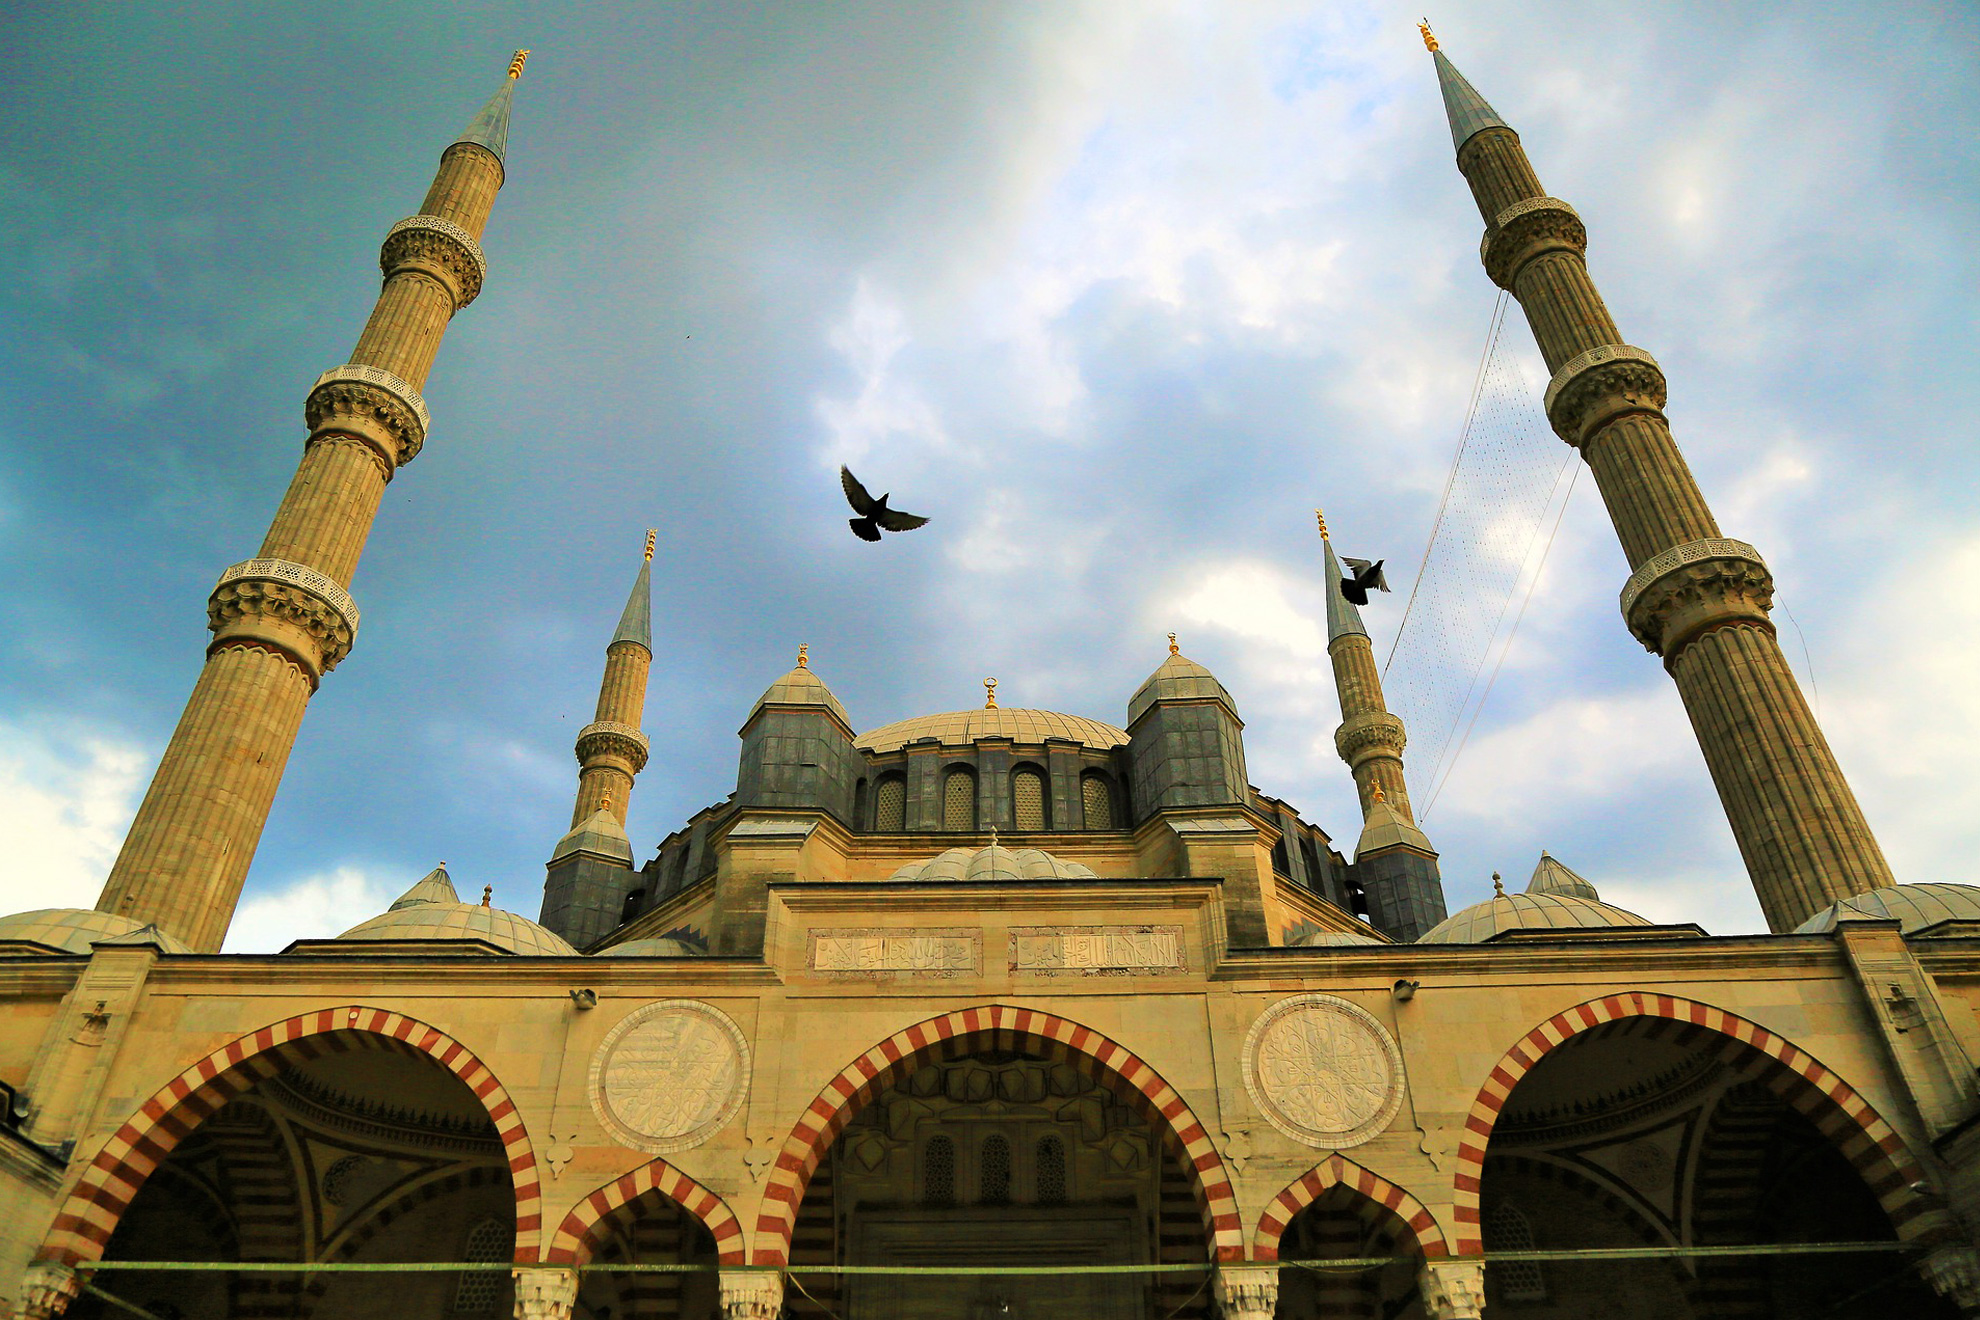 Шопинг уикенд в Одрин преди Коледа - Джамията &bdquo;Селимиe&ldquo; (Селим джамия или Селимийе джамия), Одрин, Турция - The Selimiye Mosque, Edirne, Turkey